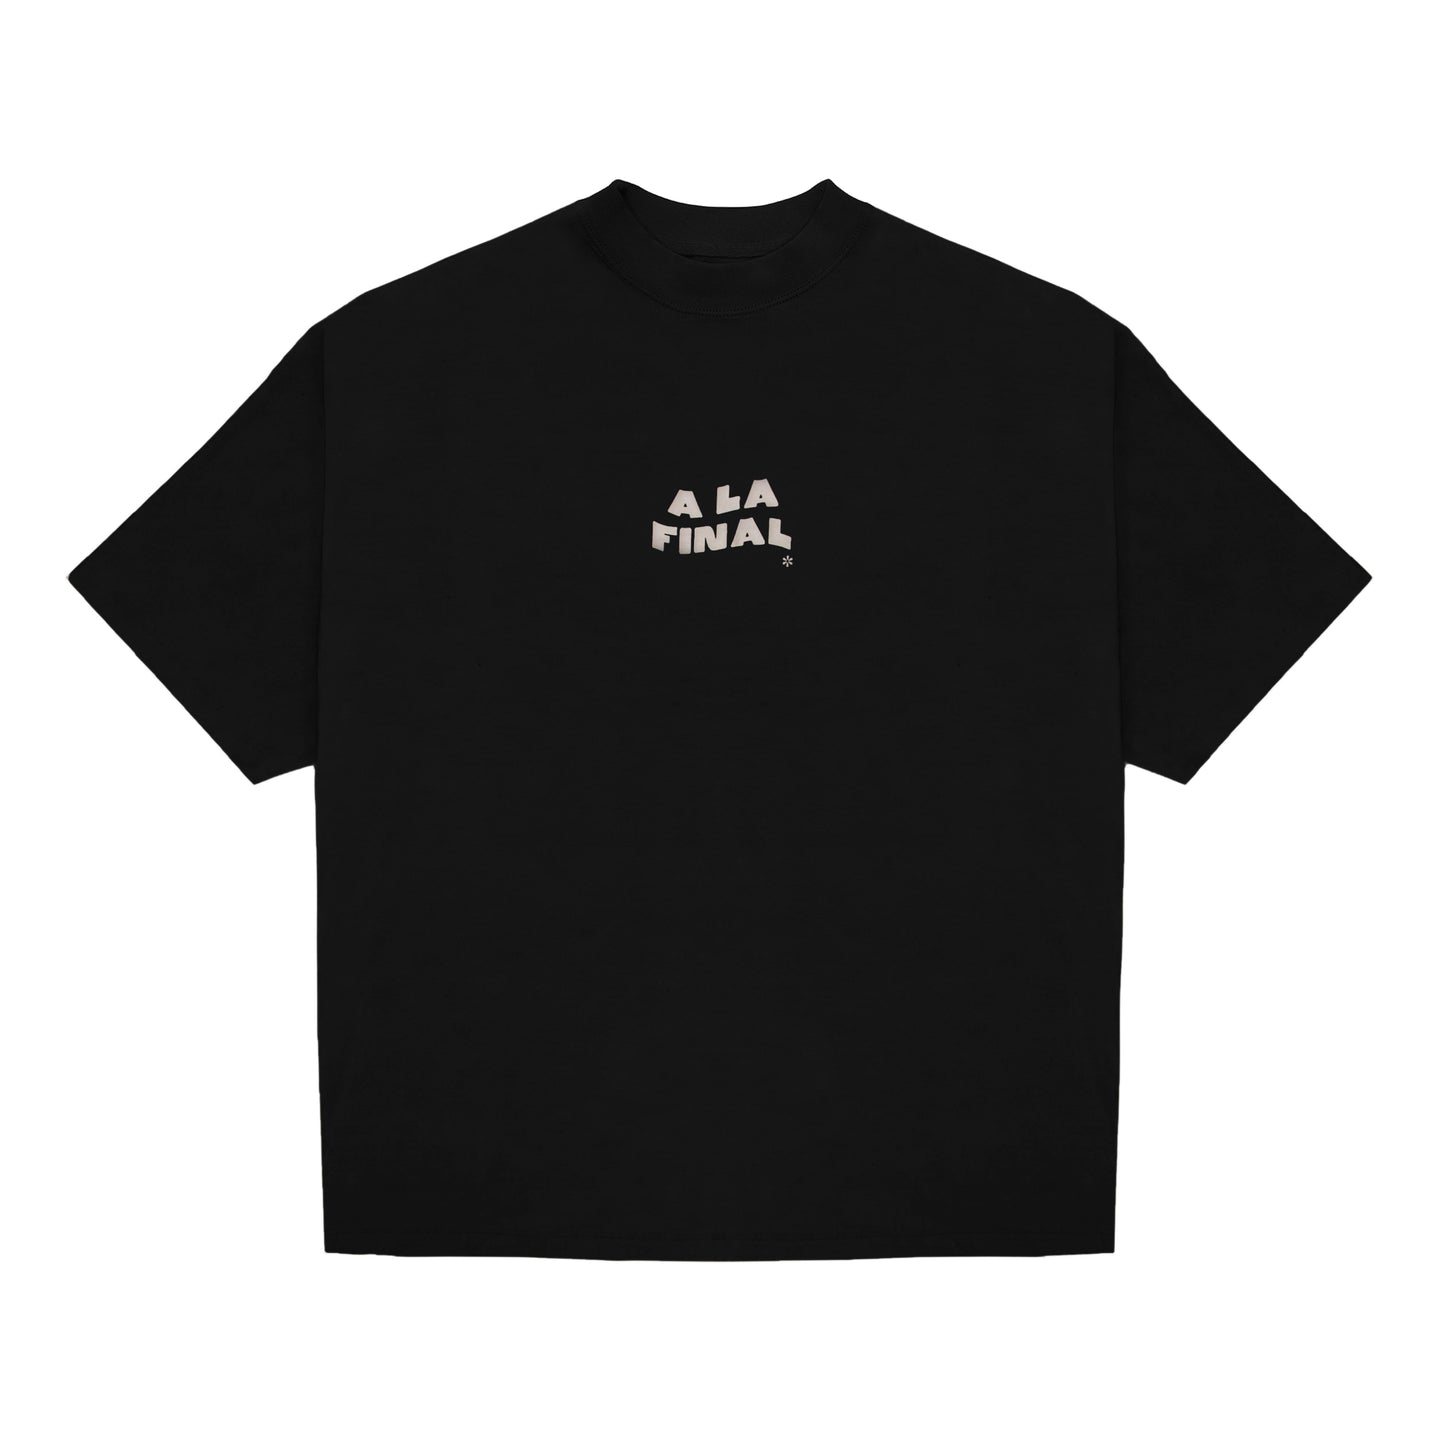 Camiseta Negra Oversize Friendship